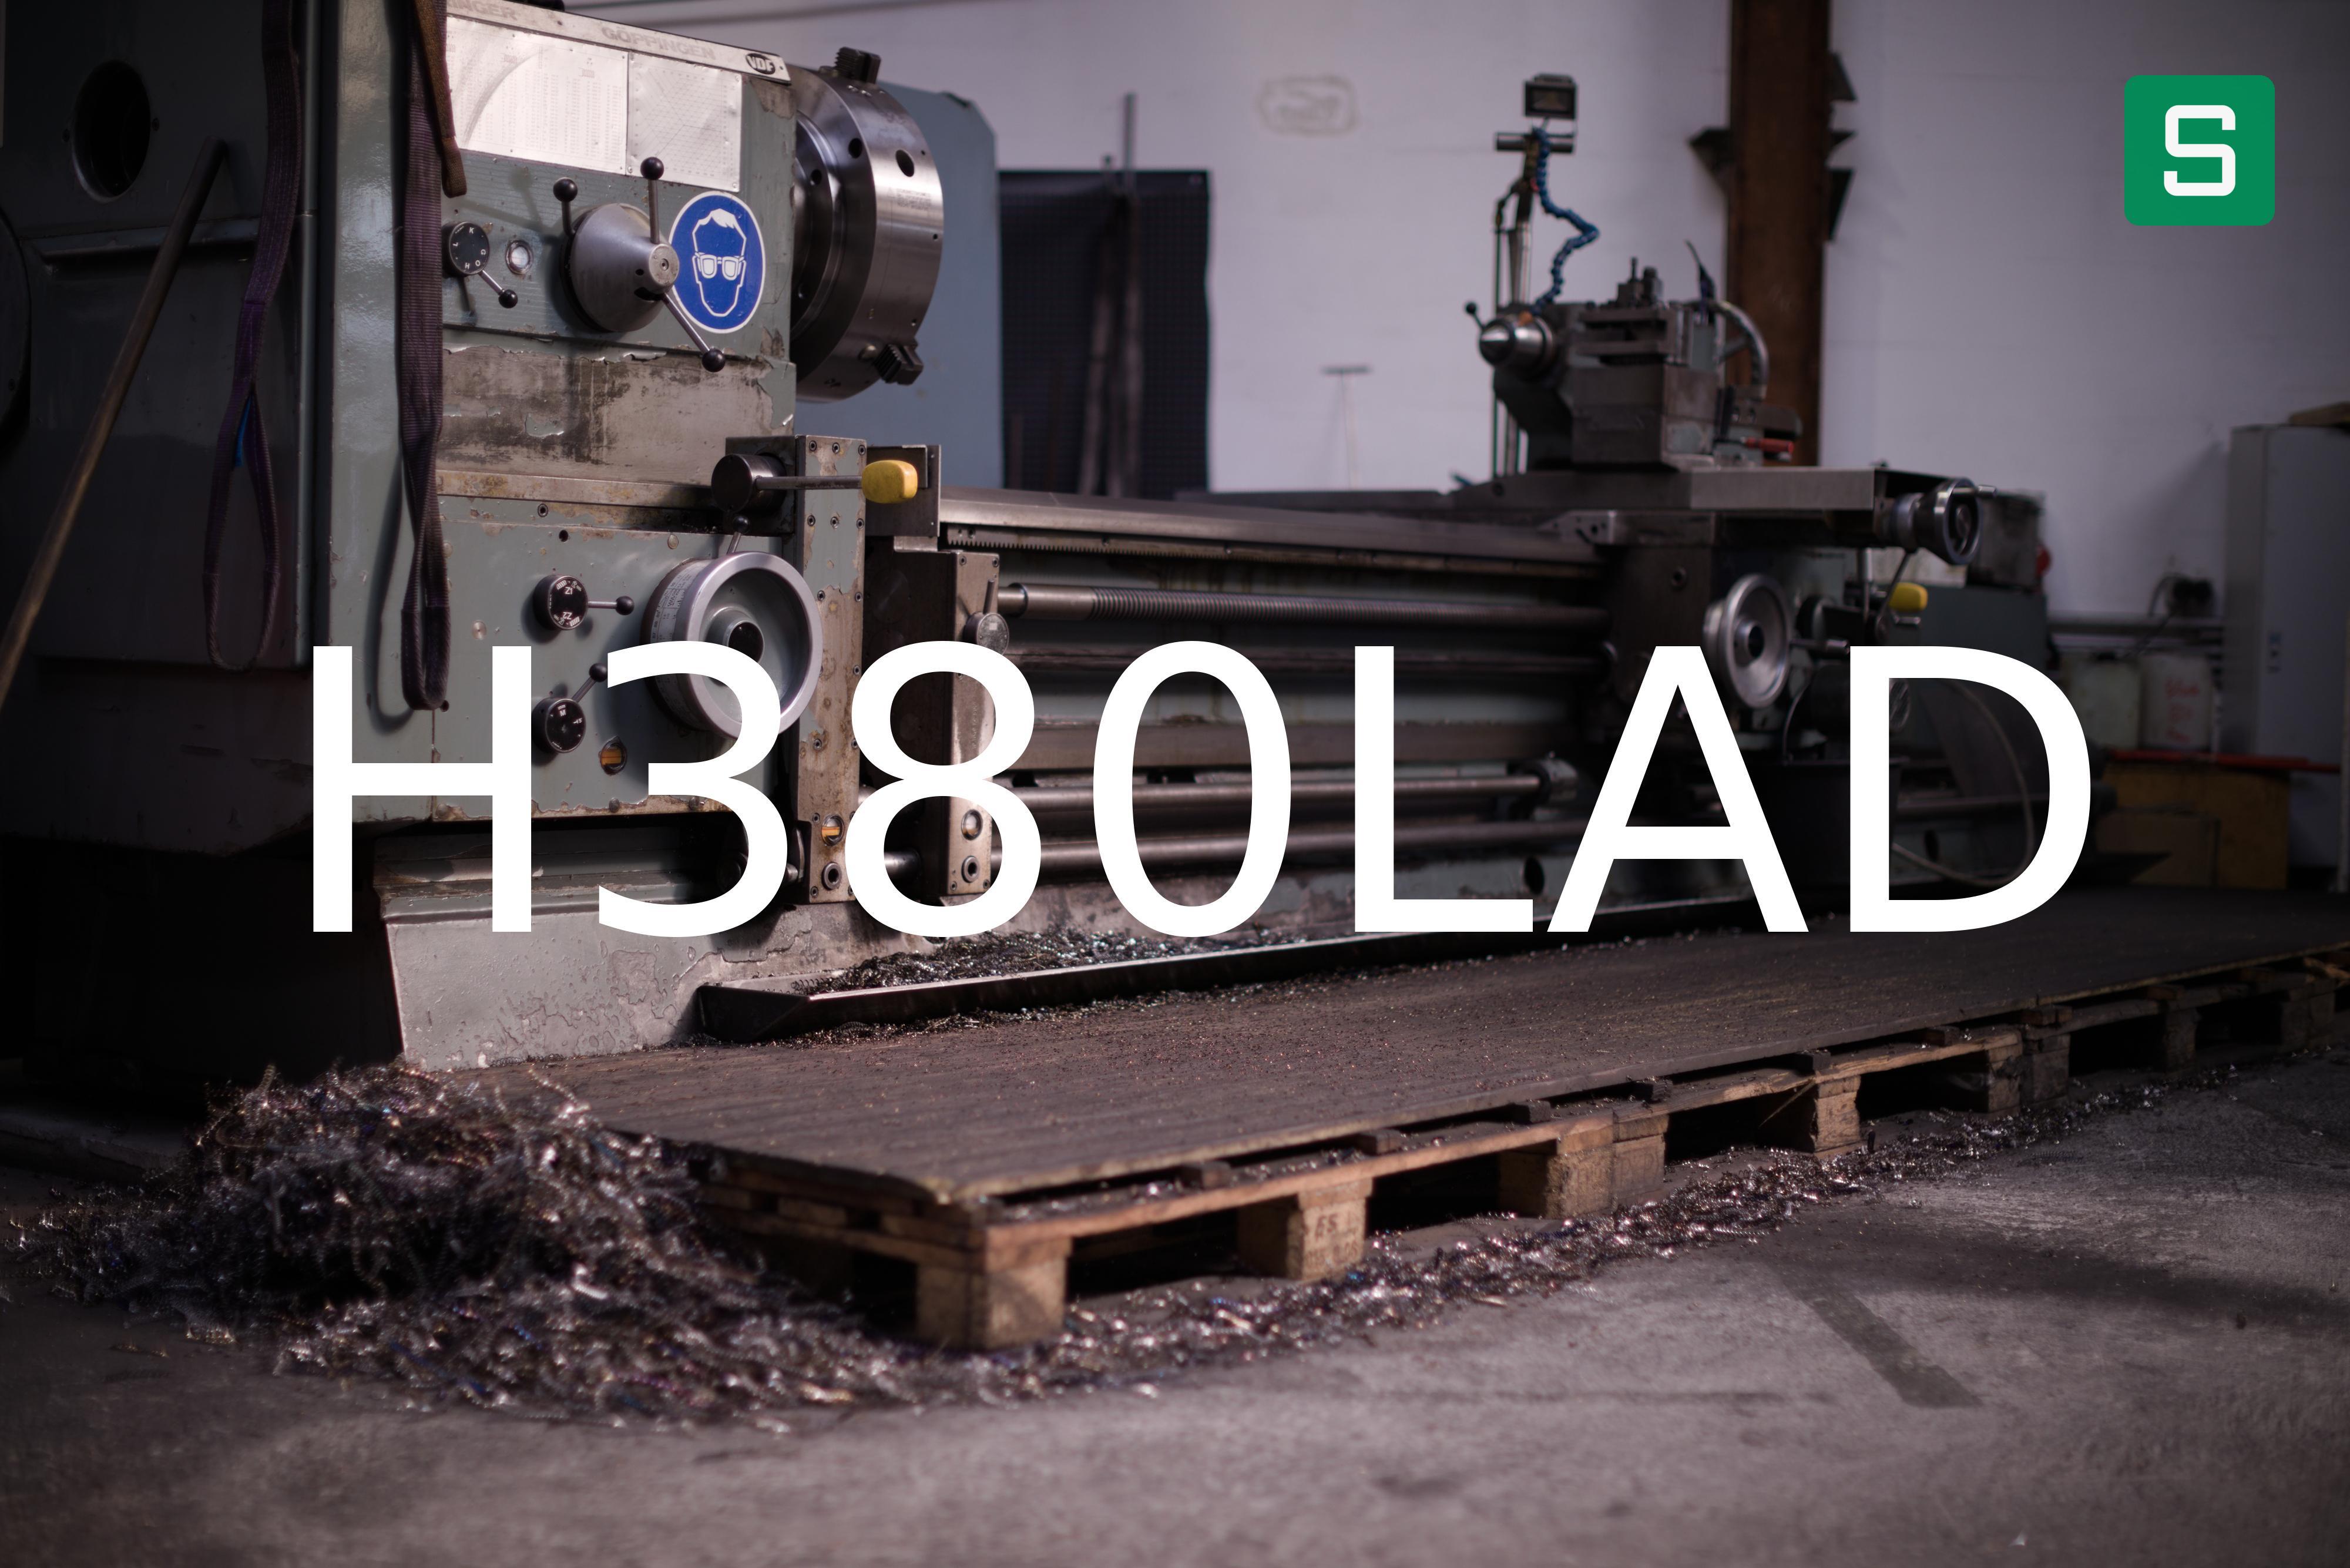 Steel Material: H380LAD